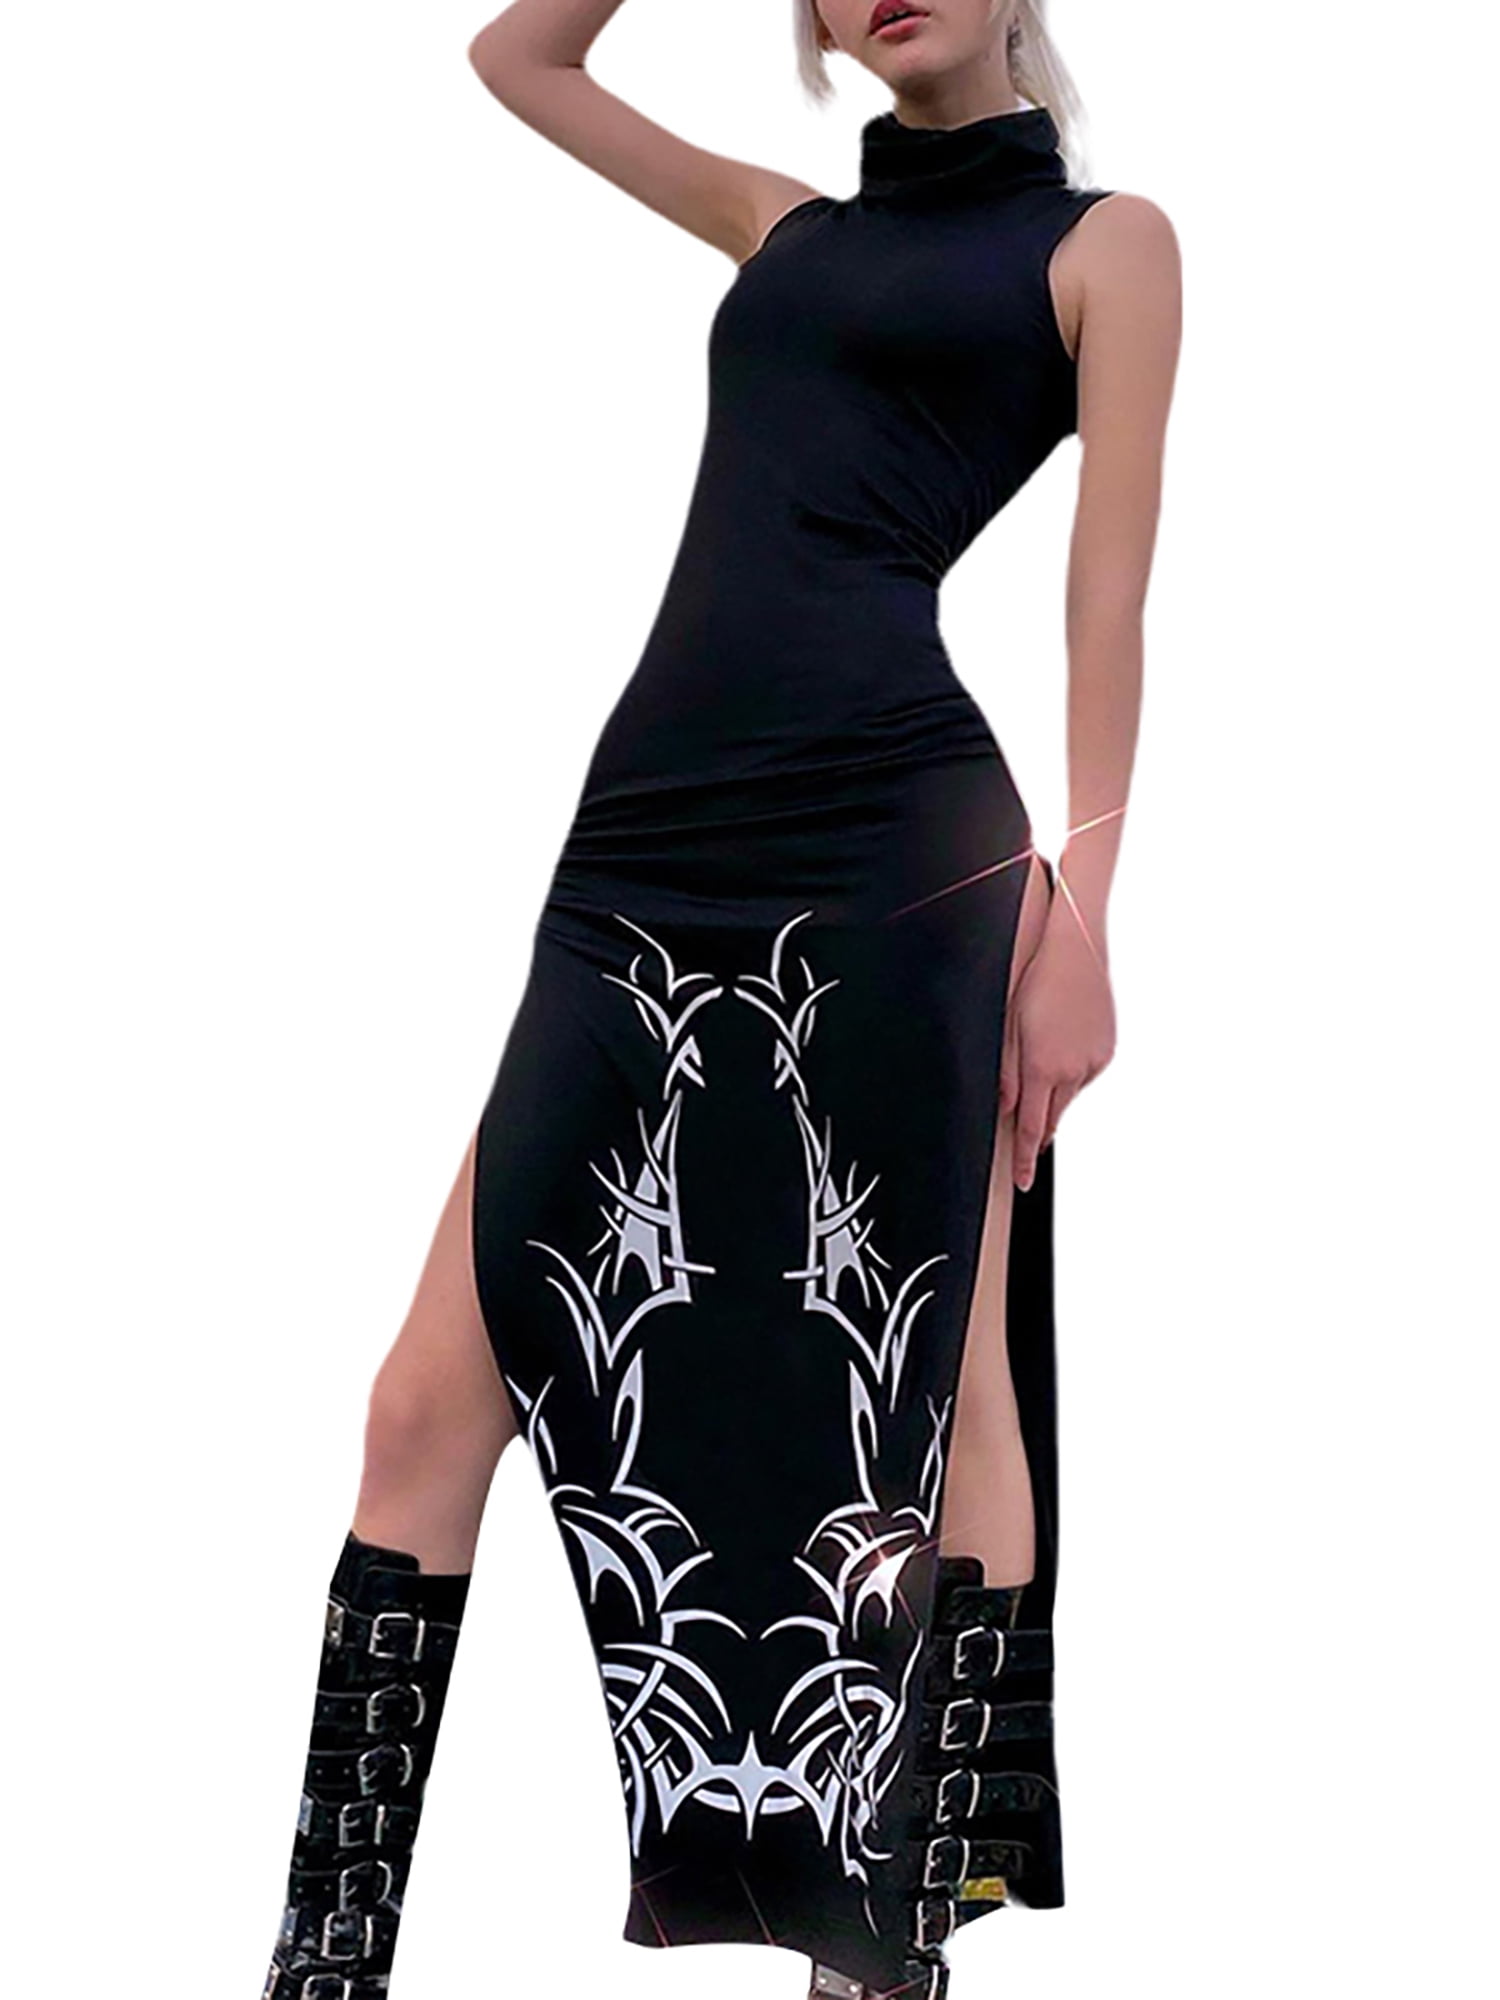 Dress for Women, Black Maxi Dress, Plus Size Maxi Dress, Gothic